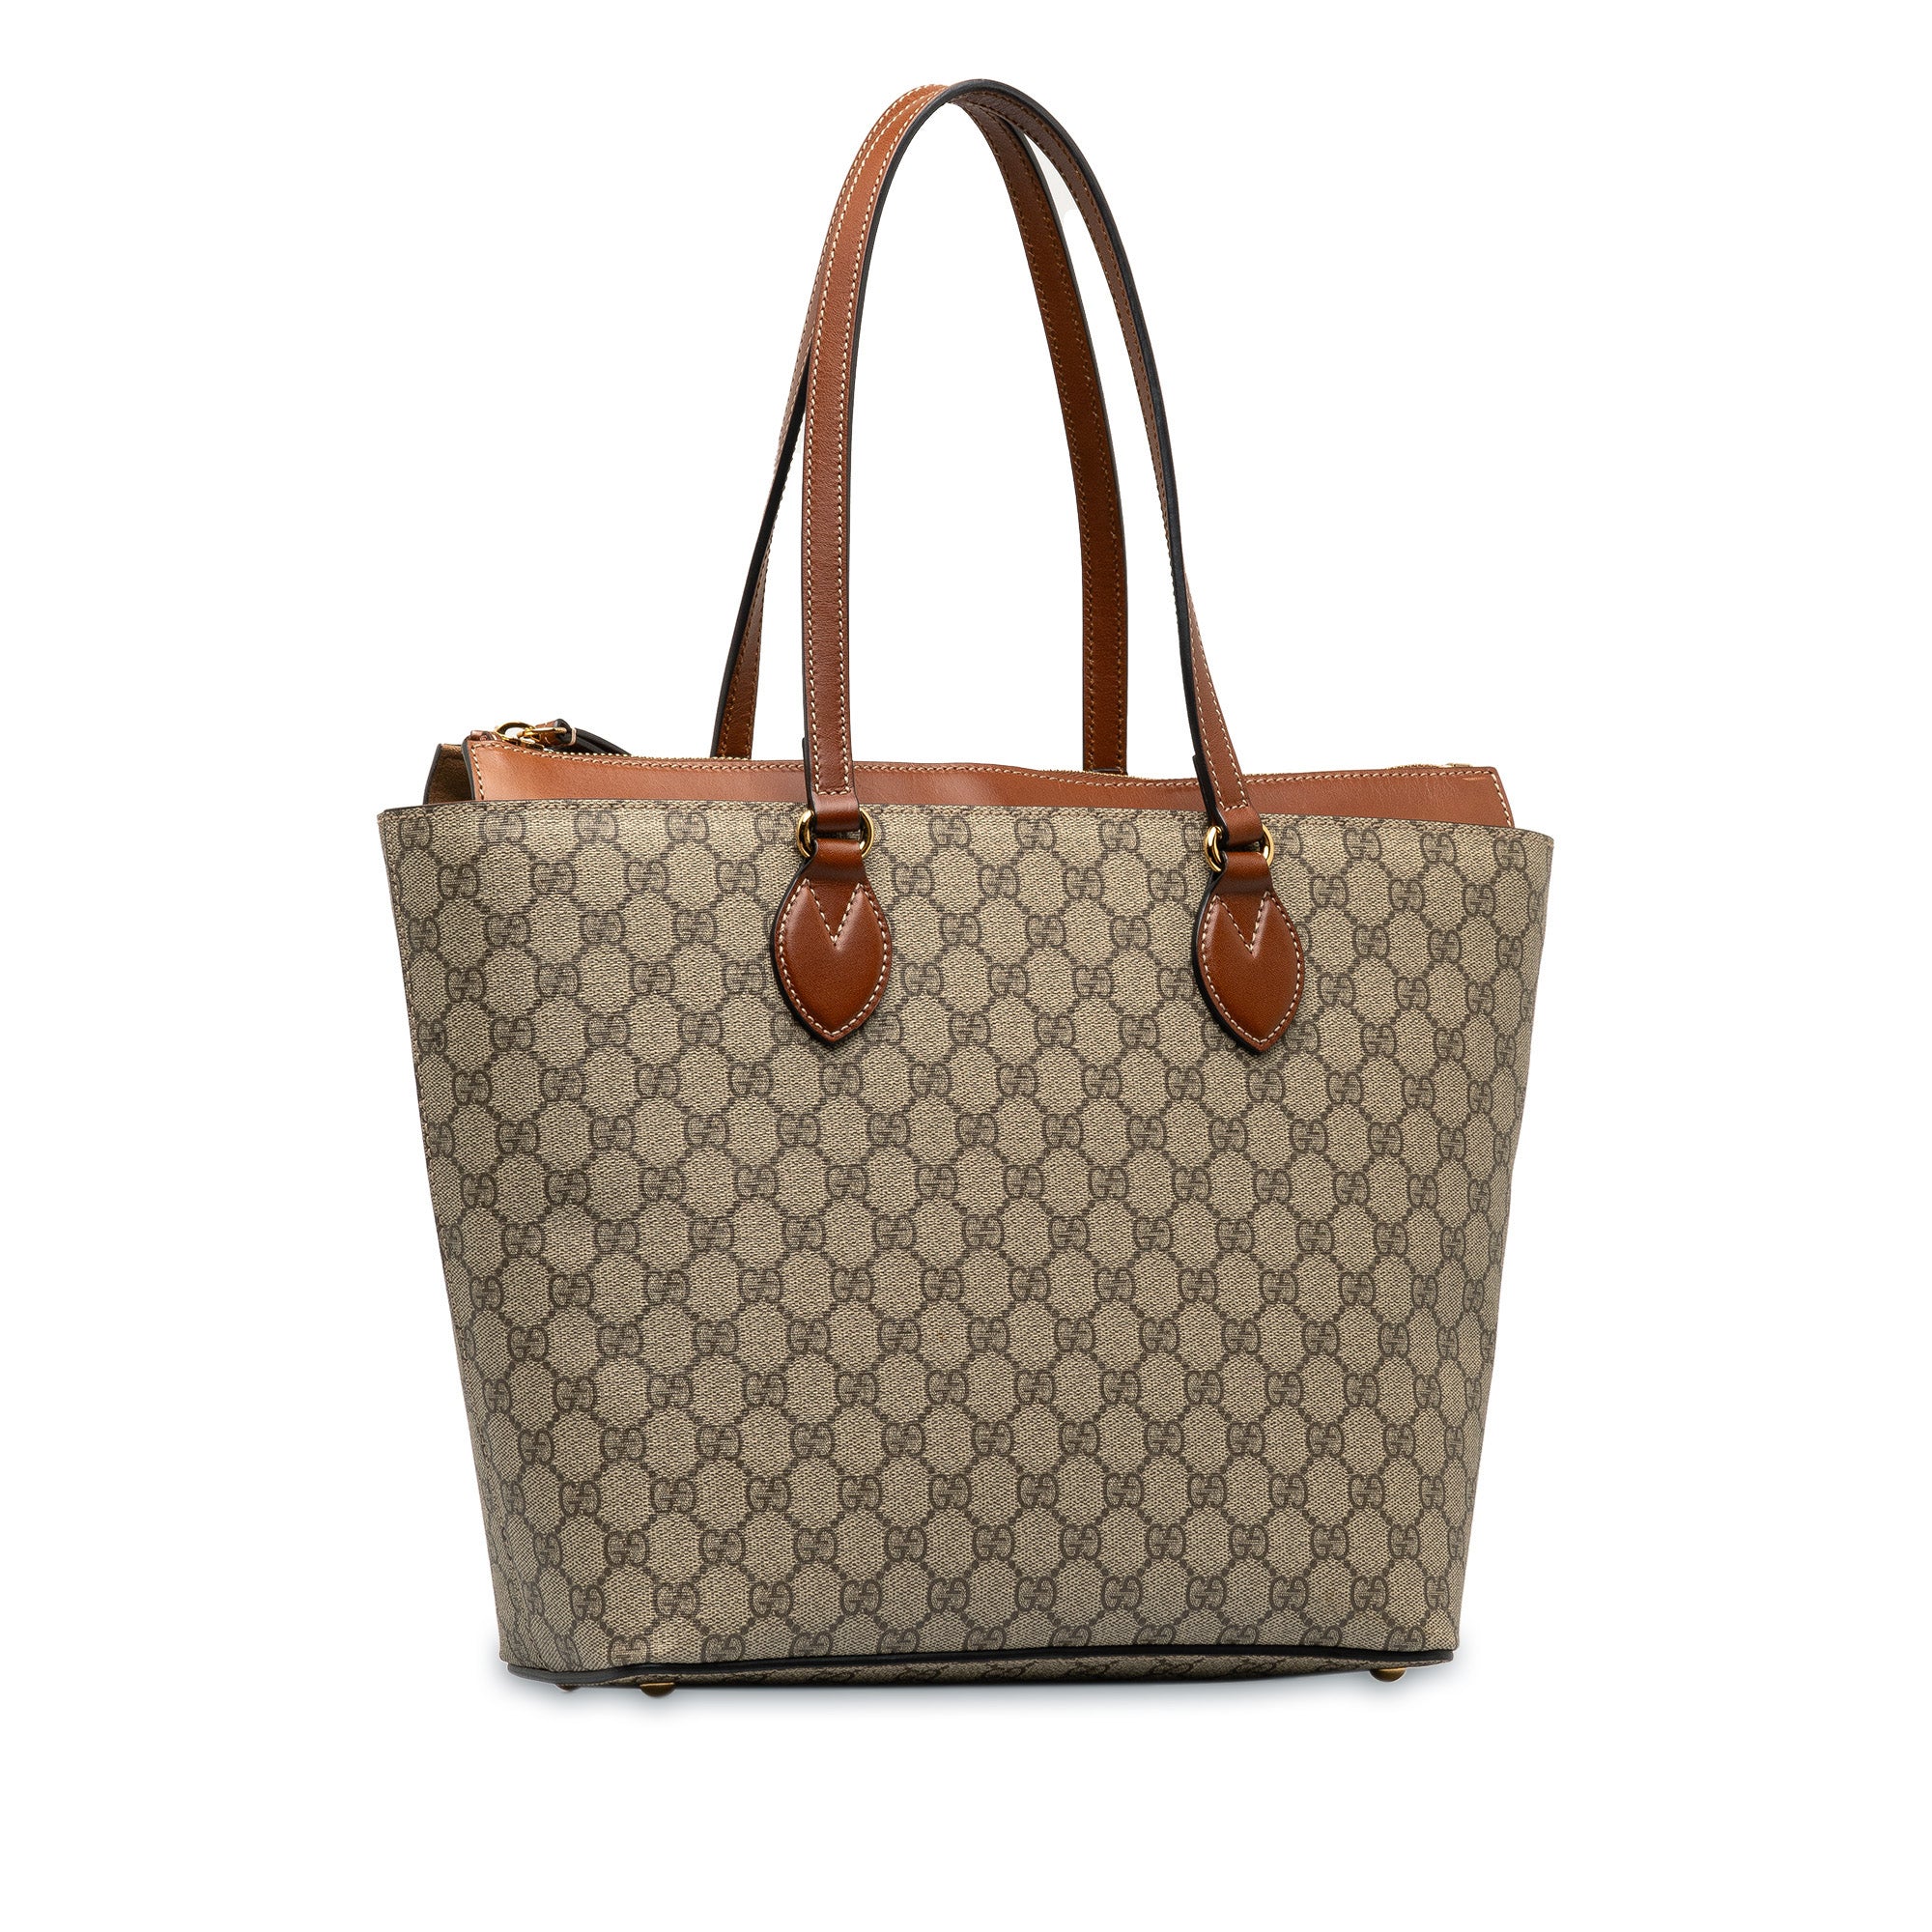 Gucci Beige & Black Small GG Marmont Shoulder Bag